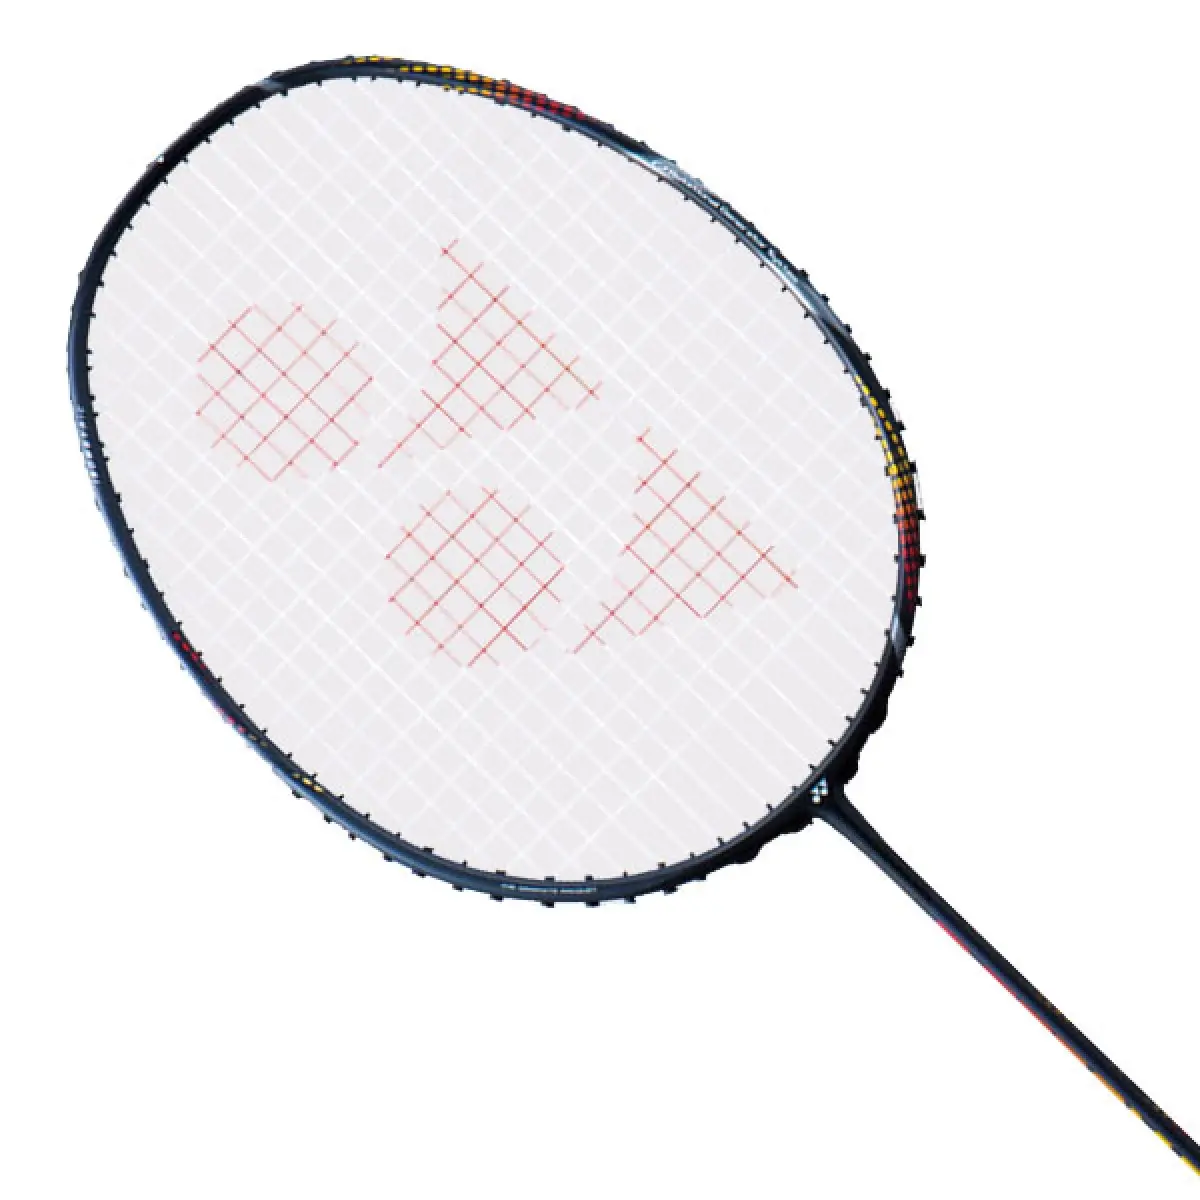 Yonex Astrox 22 Badminton Racket - Sportsuncle